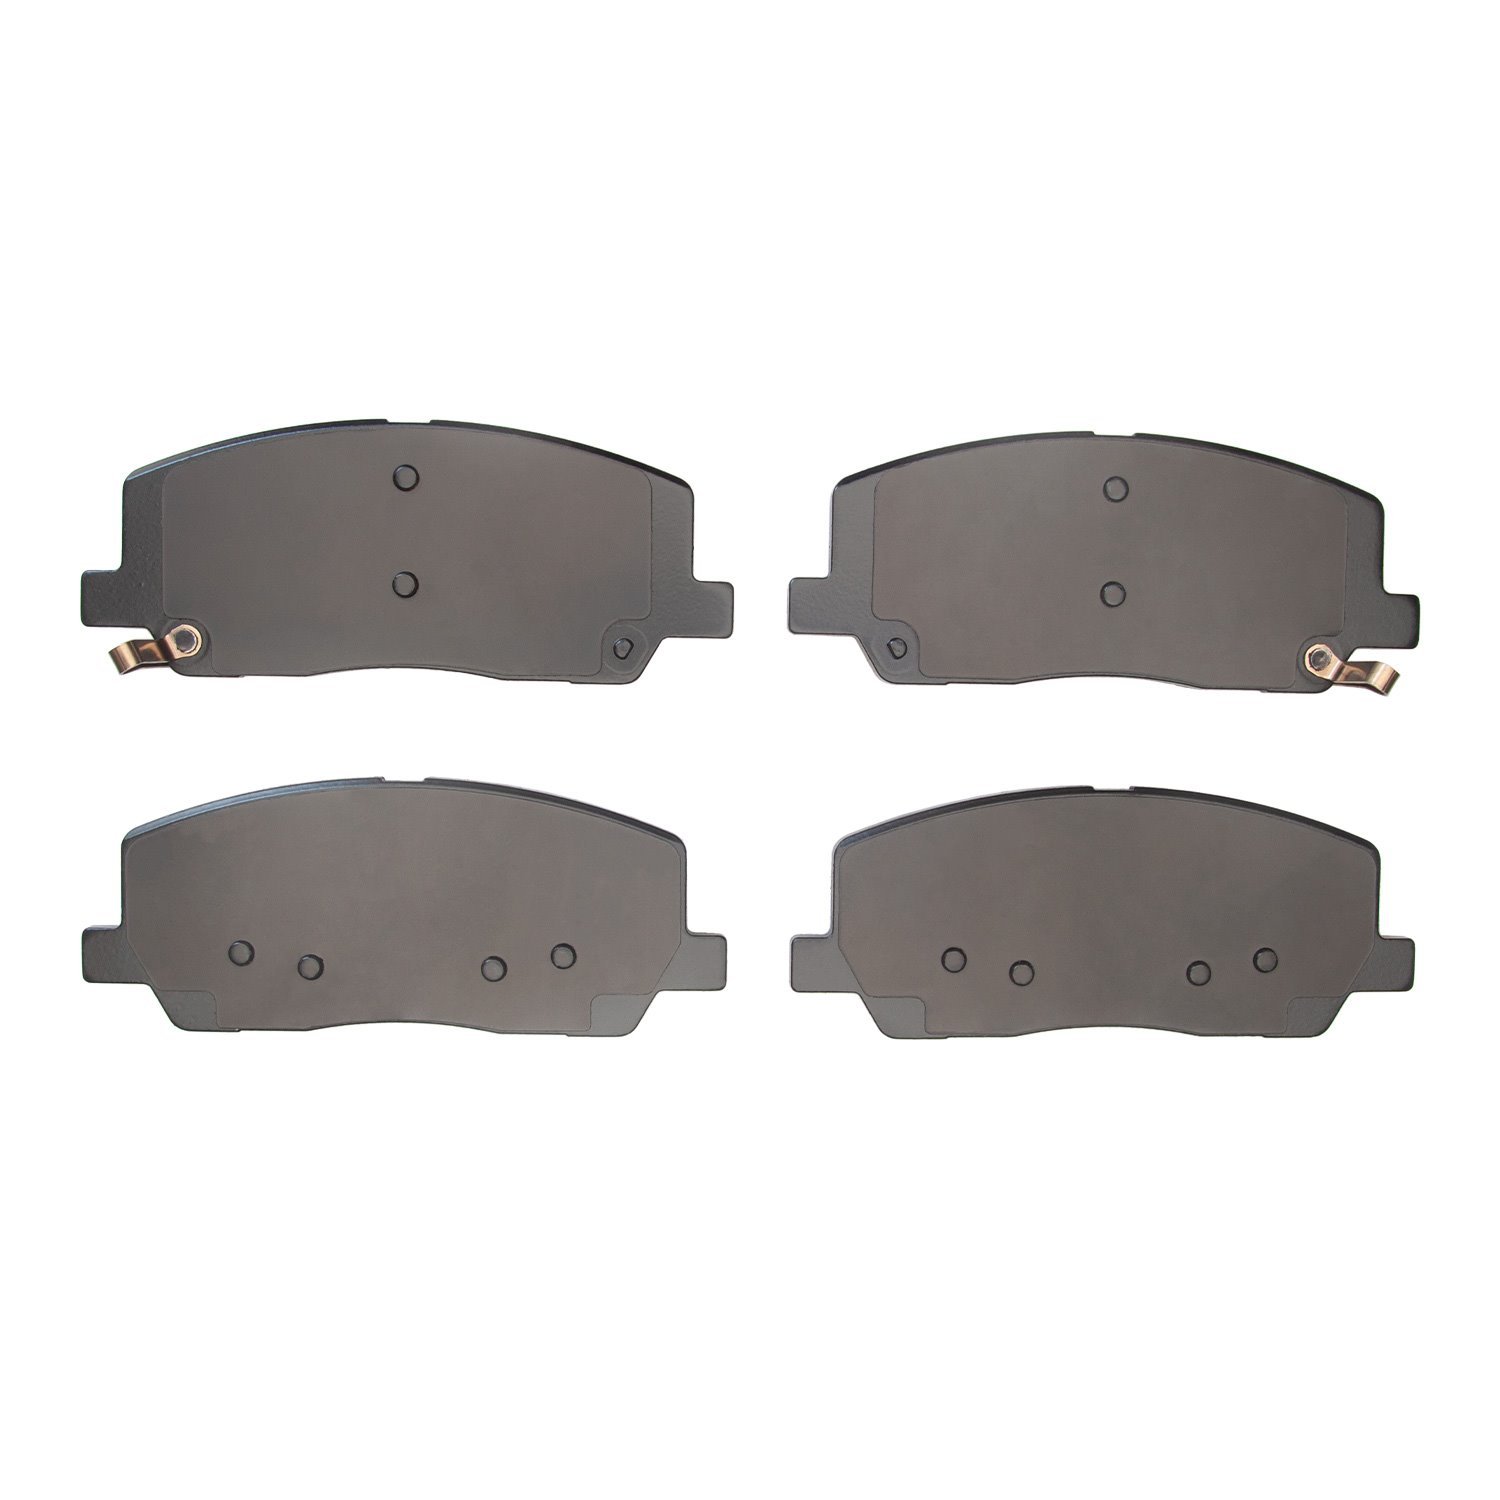 1551-2379-00 5000 Advanced Ceramic Brake Pads, Fits Select Kia/Hyundai/Genesis, Position: Front